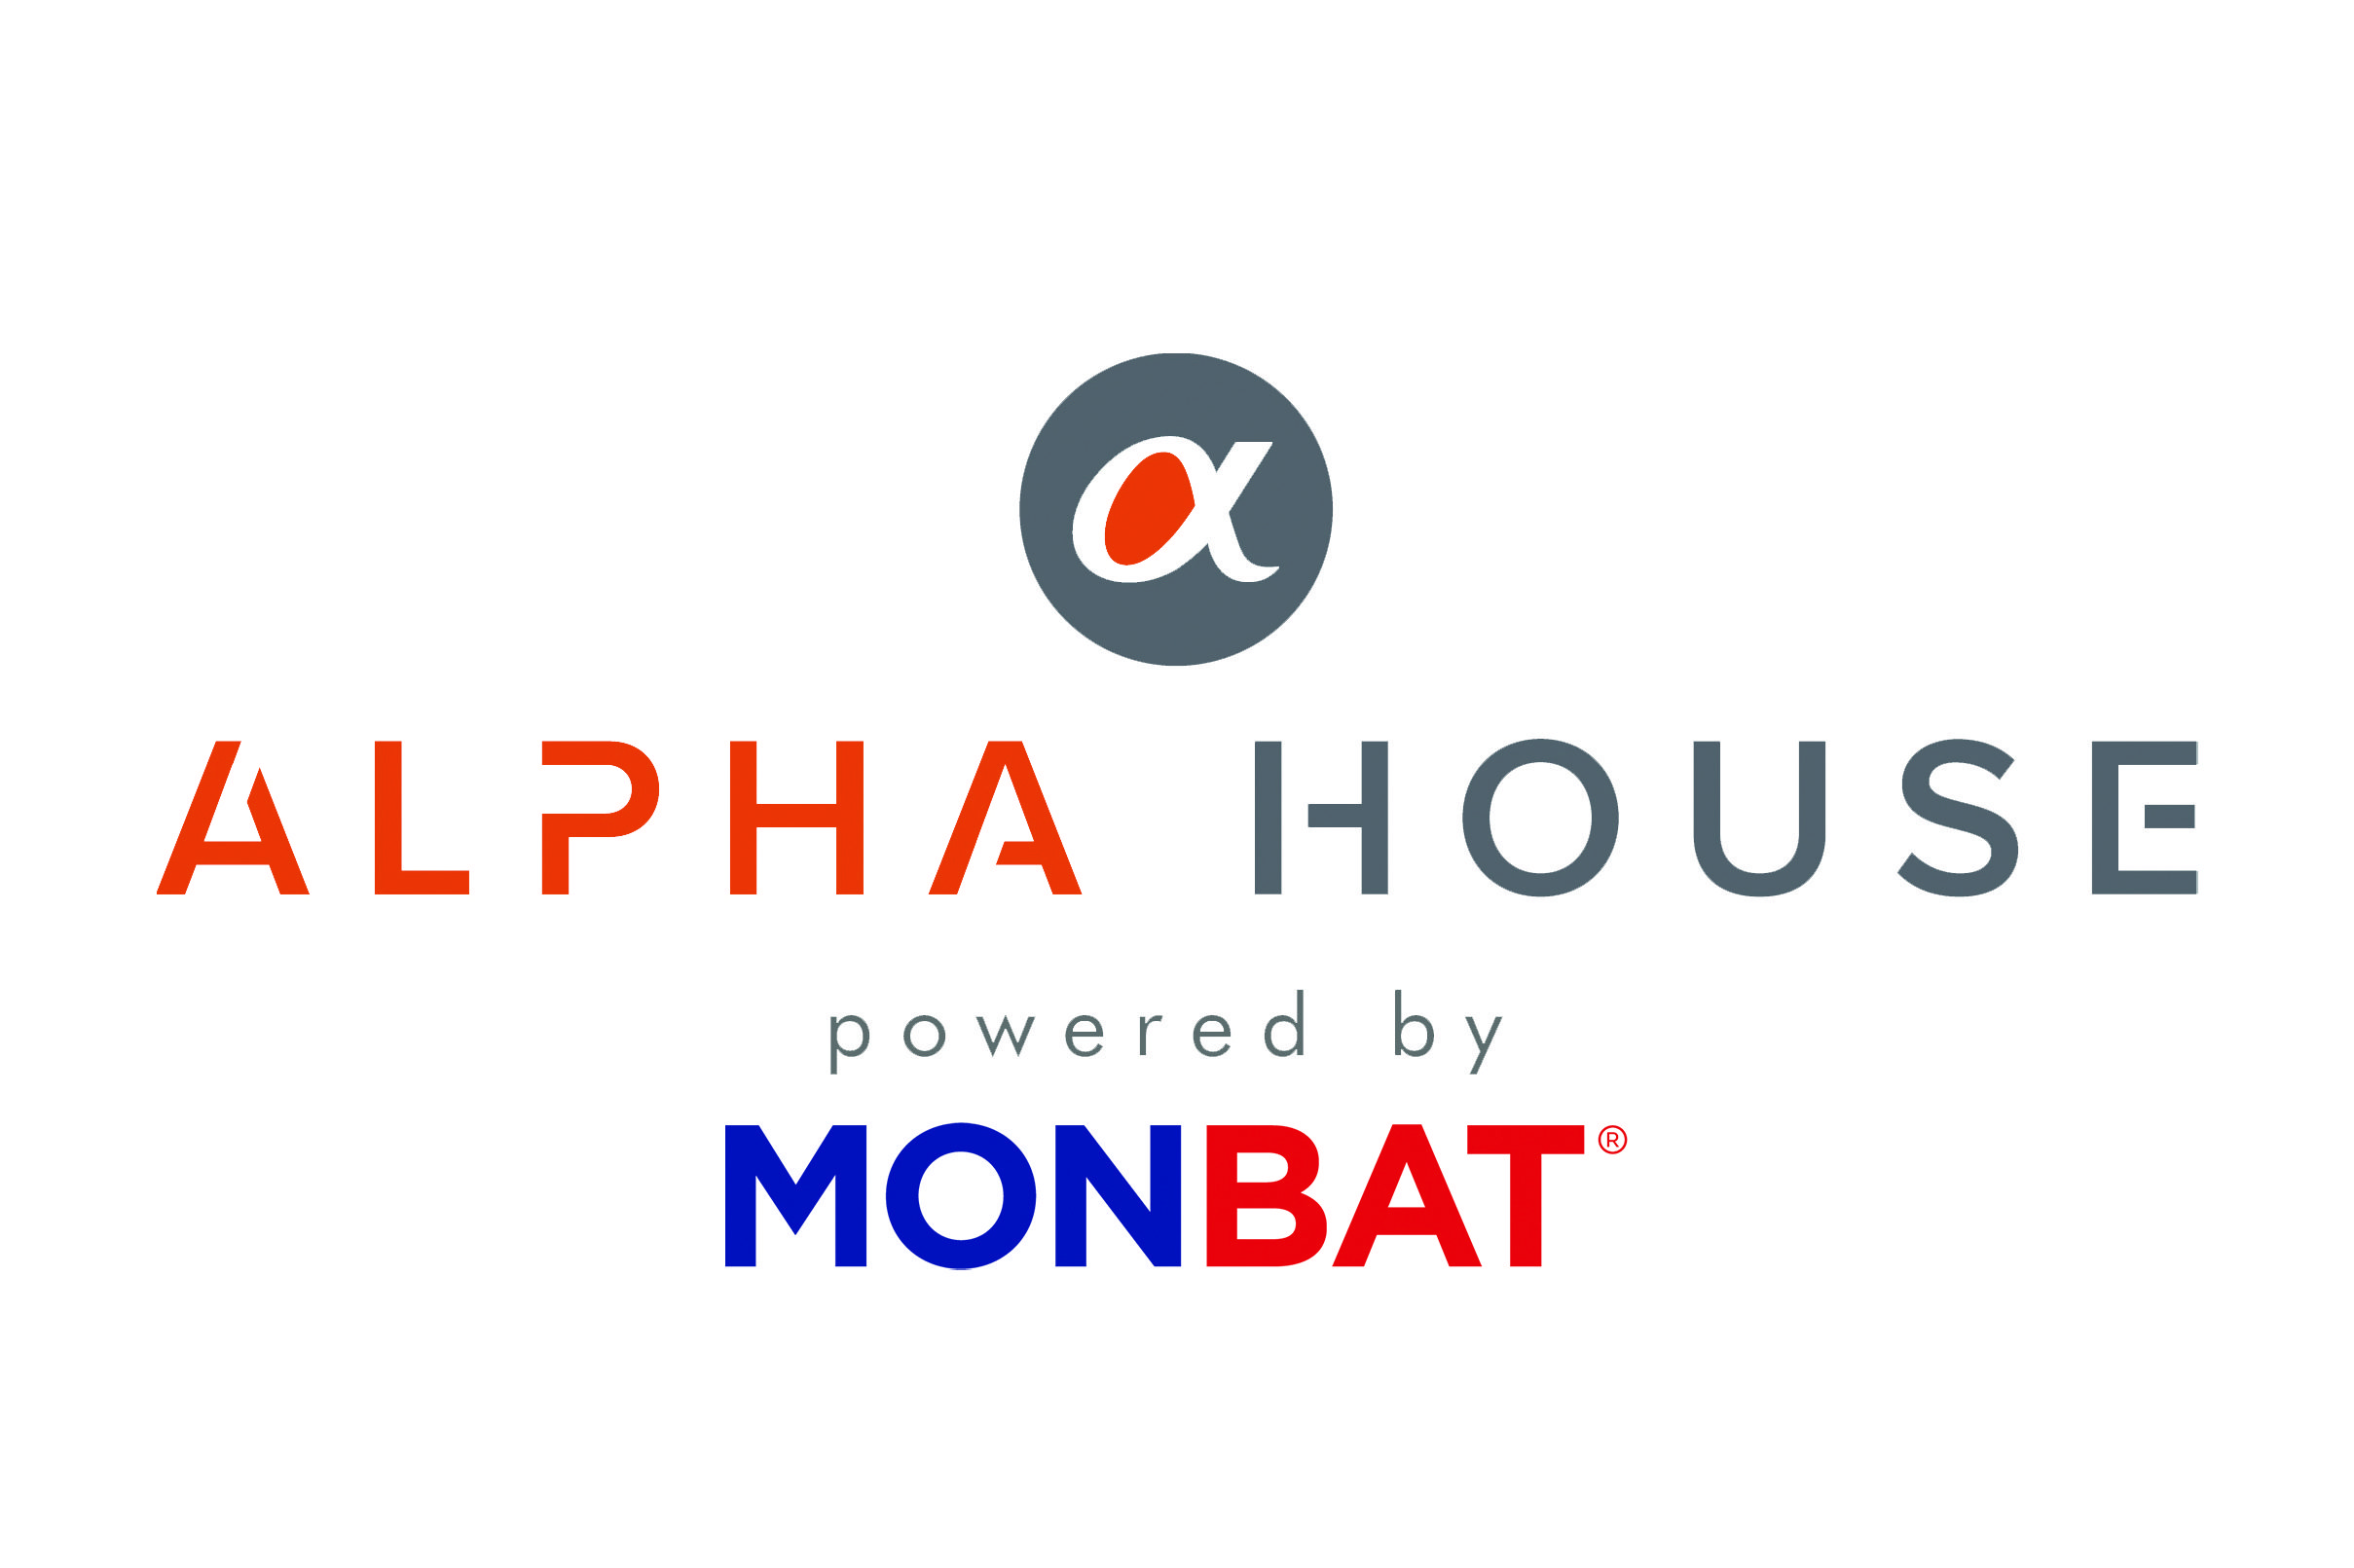 Alpha House powered by MONBAT logo